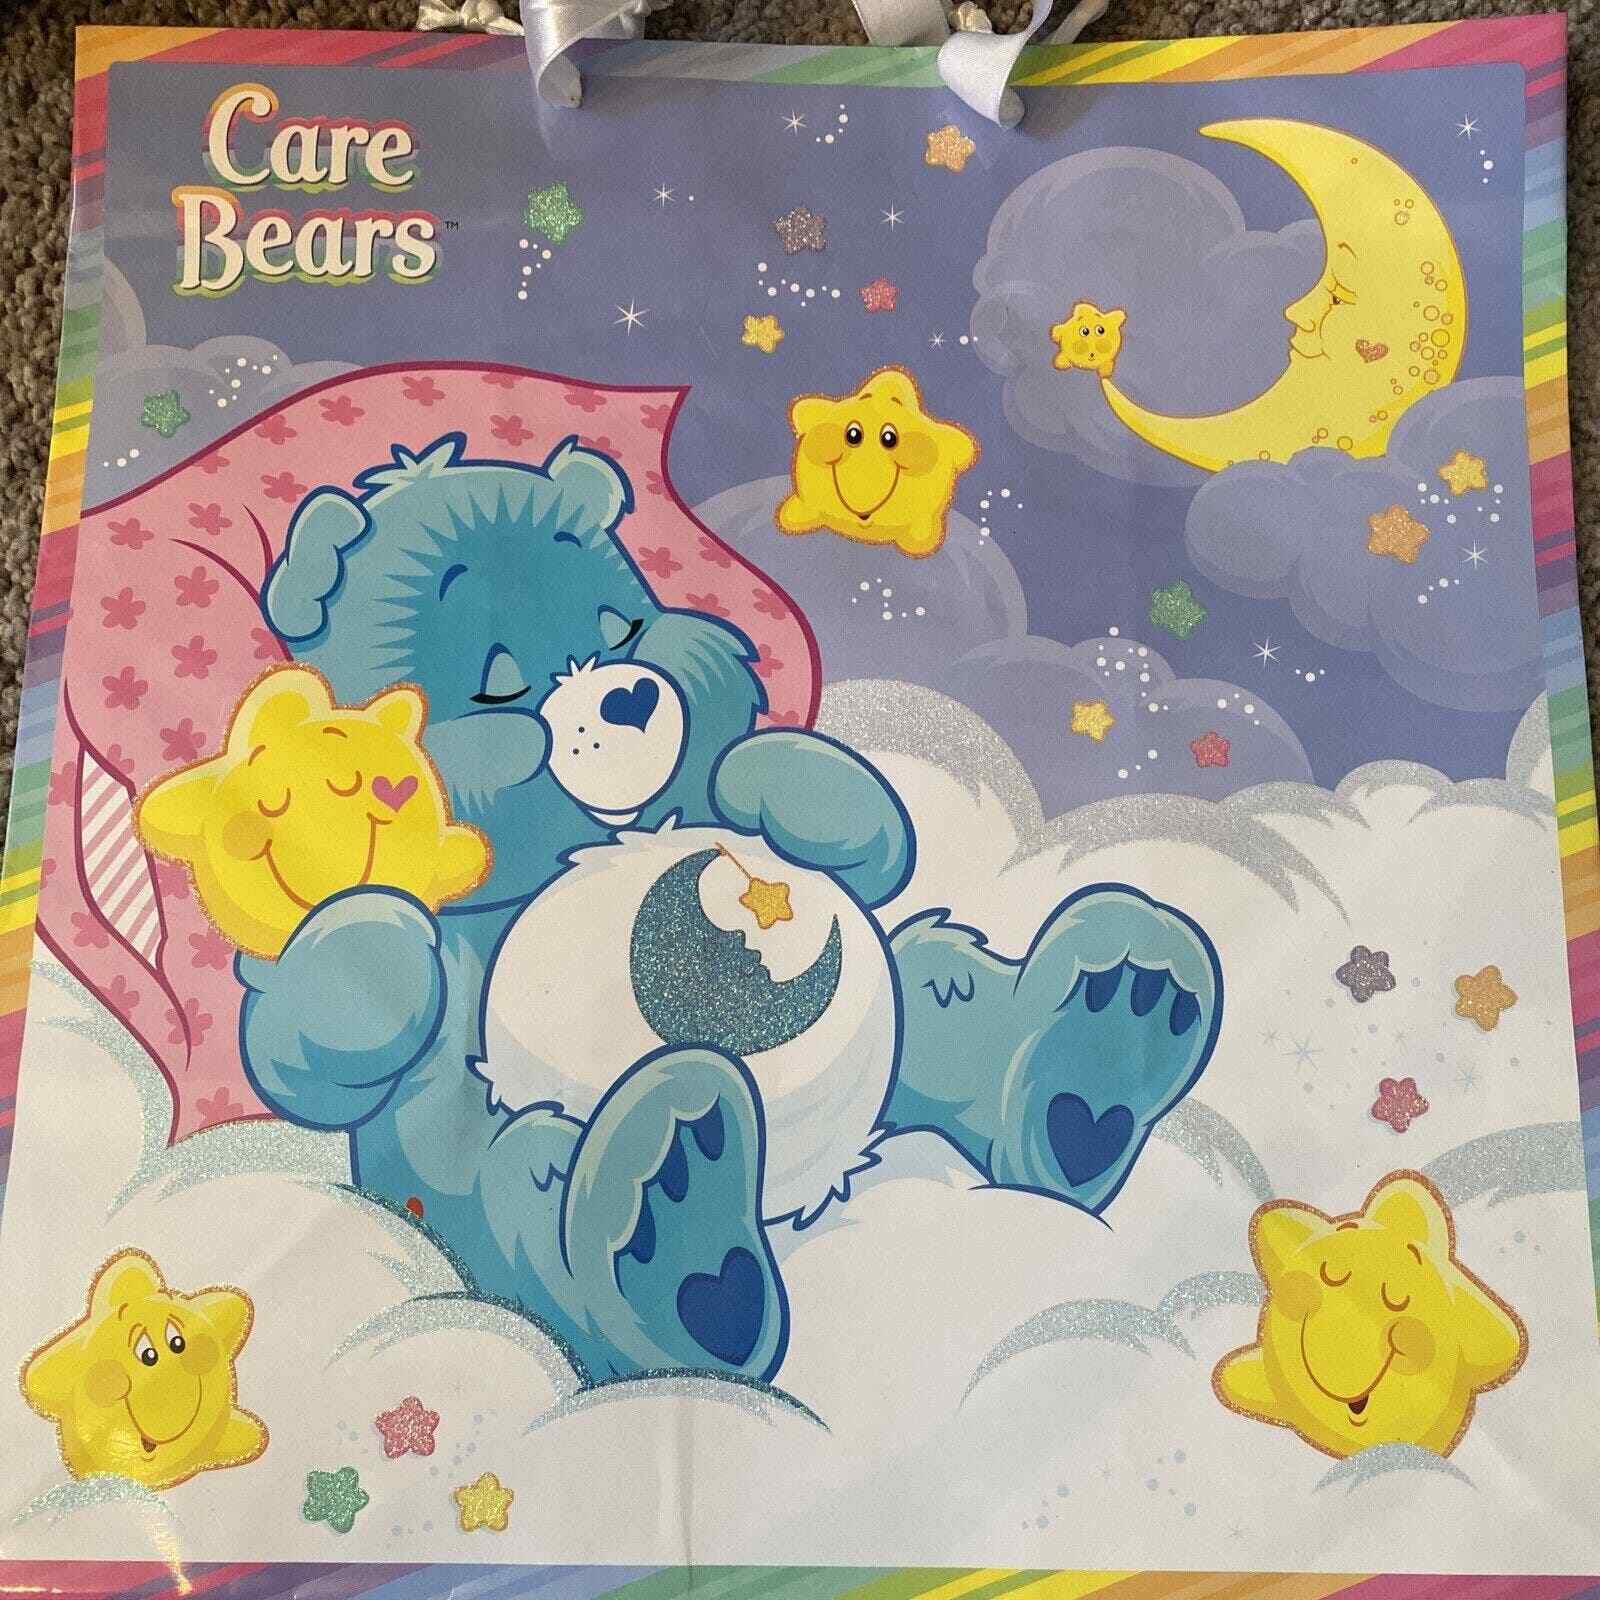 2003 American Greetings Bedtime Bear Care Bears Gift Bag. Brand New, LARGE